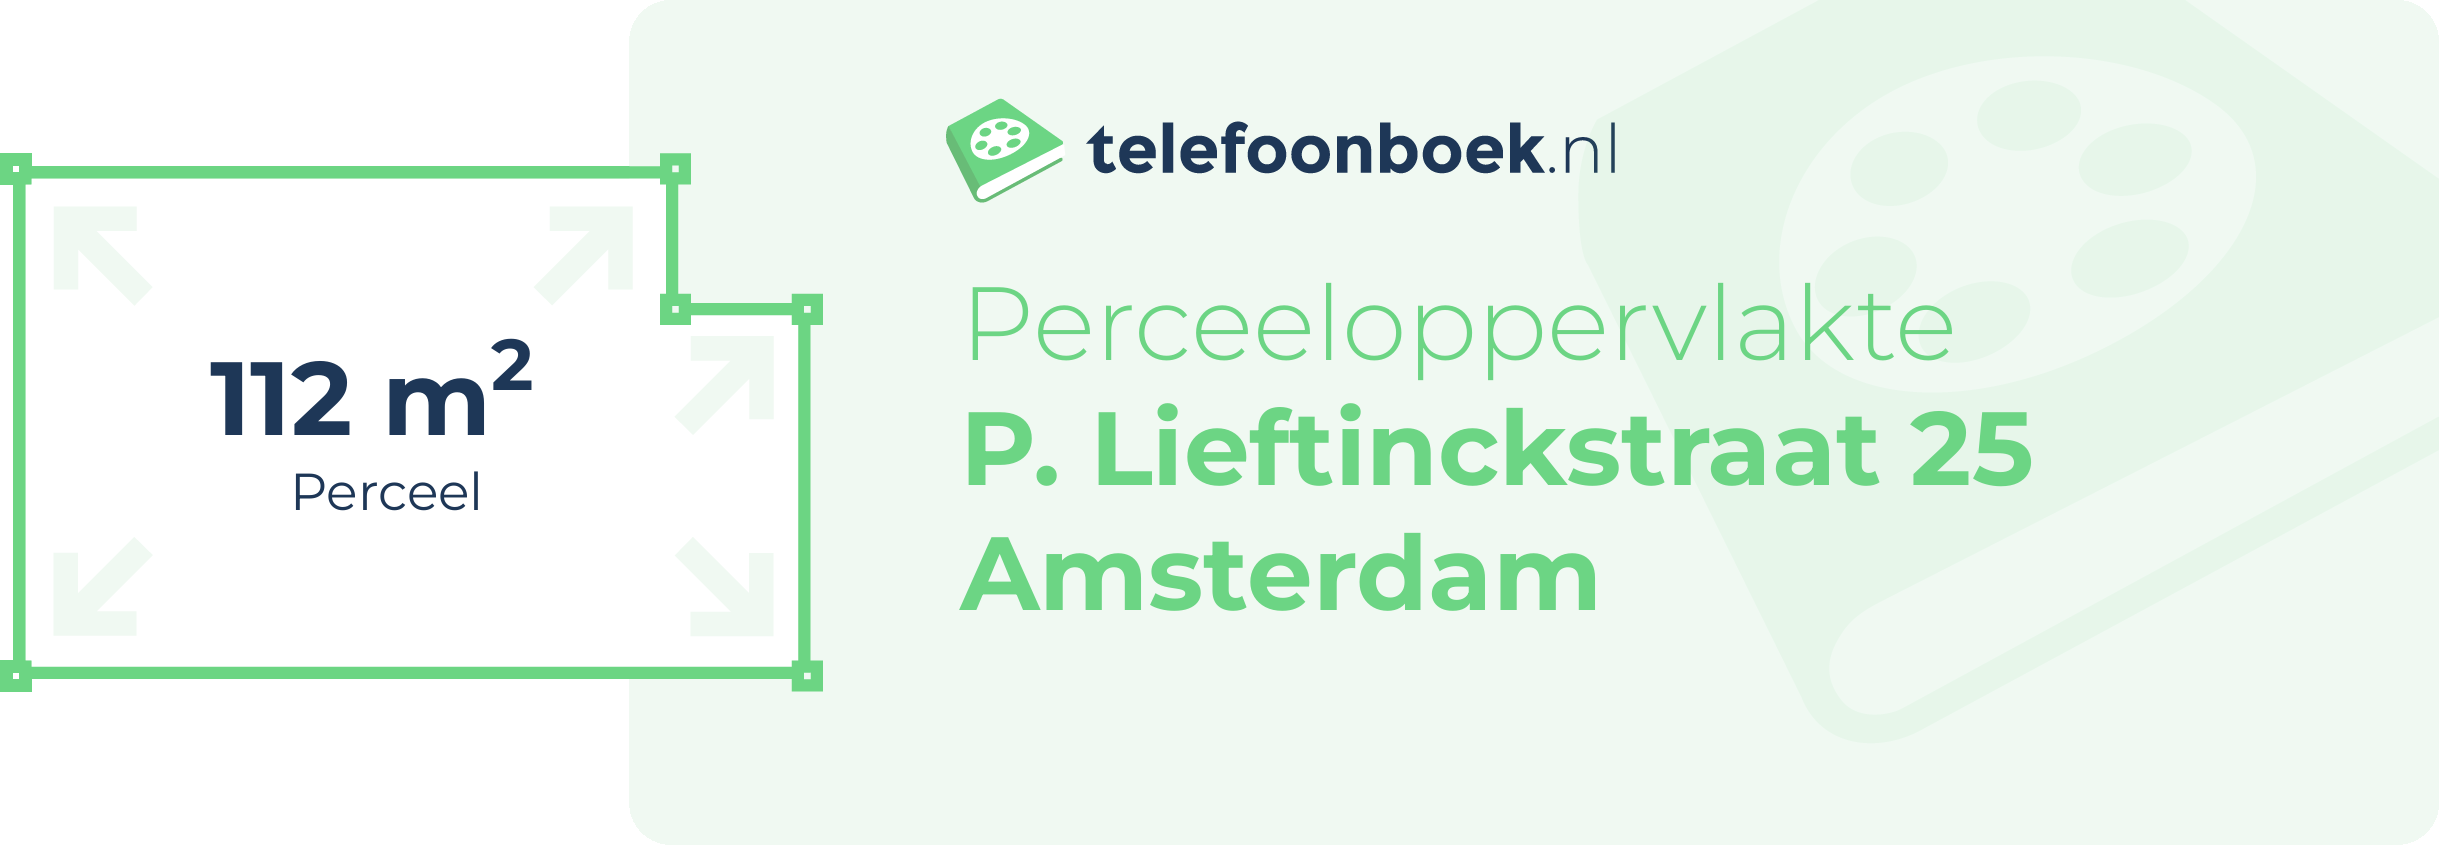 Perceeloppervlakte P. Lieftinckstraat 25 Amsterdam